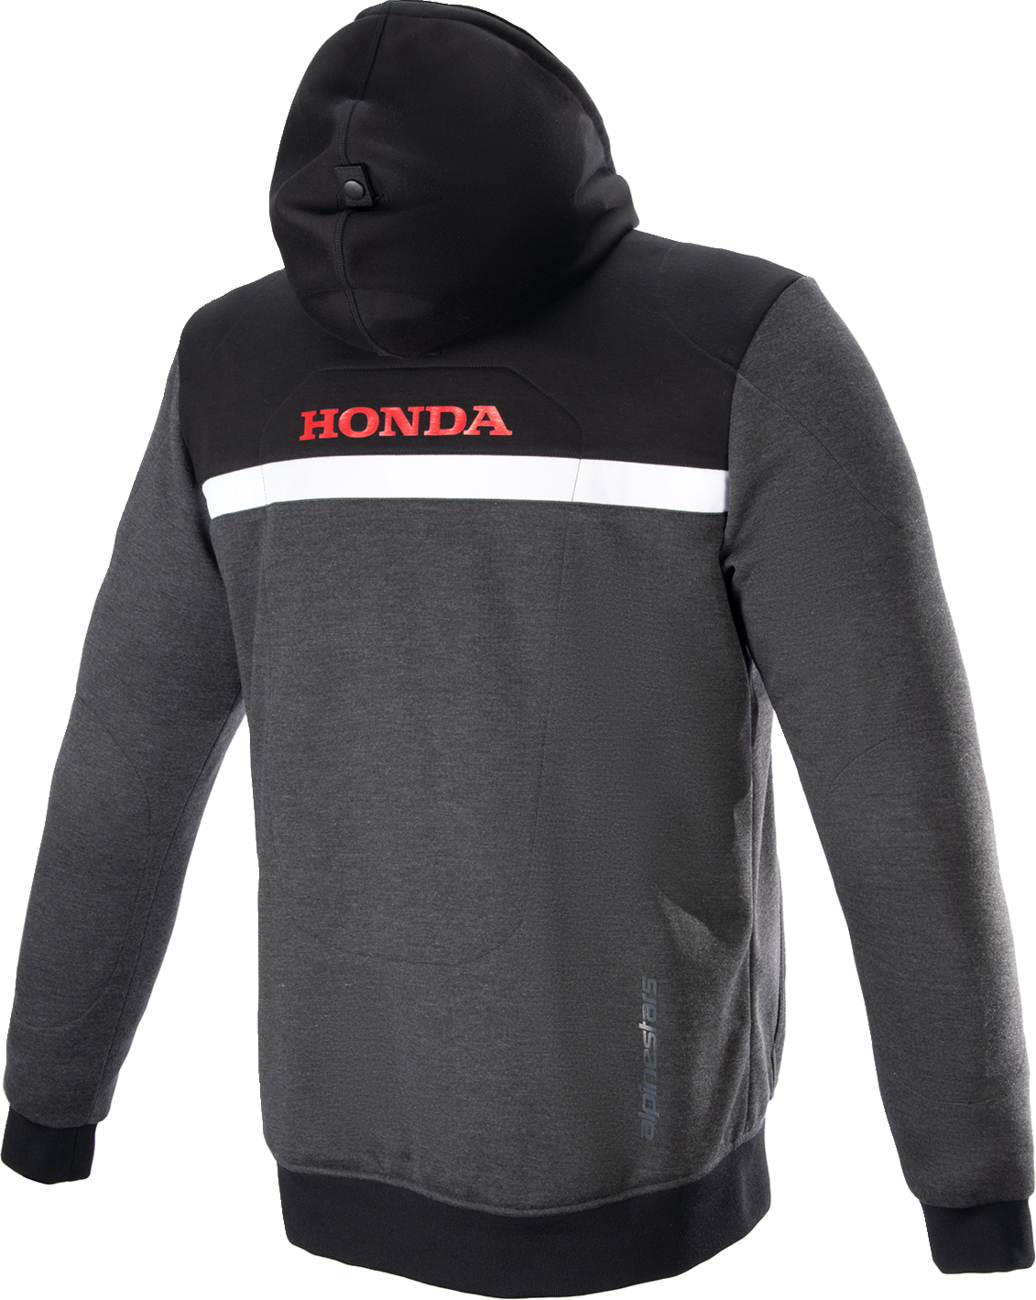 ALPINESTARS Honda Chrome Street Hoodie - Black/Gray/Red - Small 4201323-1908-S